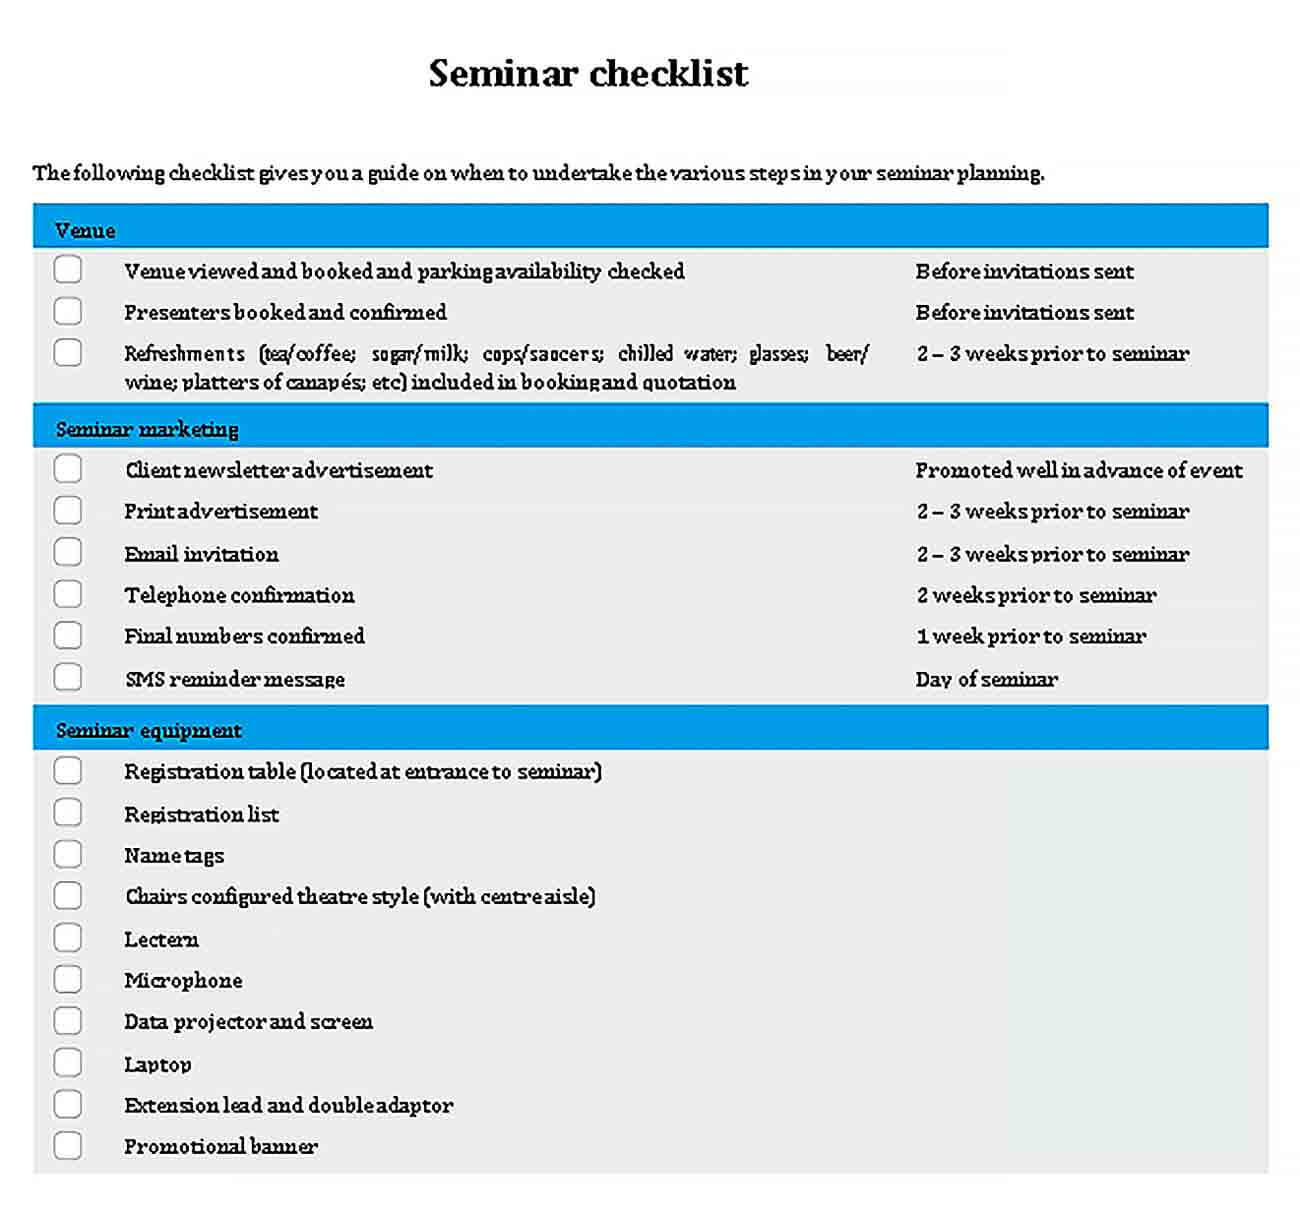 Sample Seminar Checklist in PDF